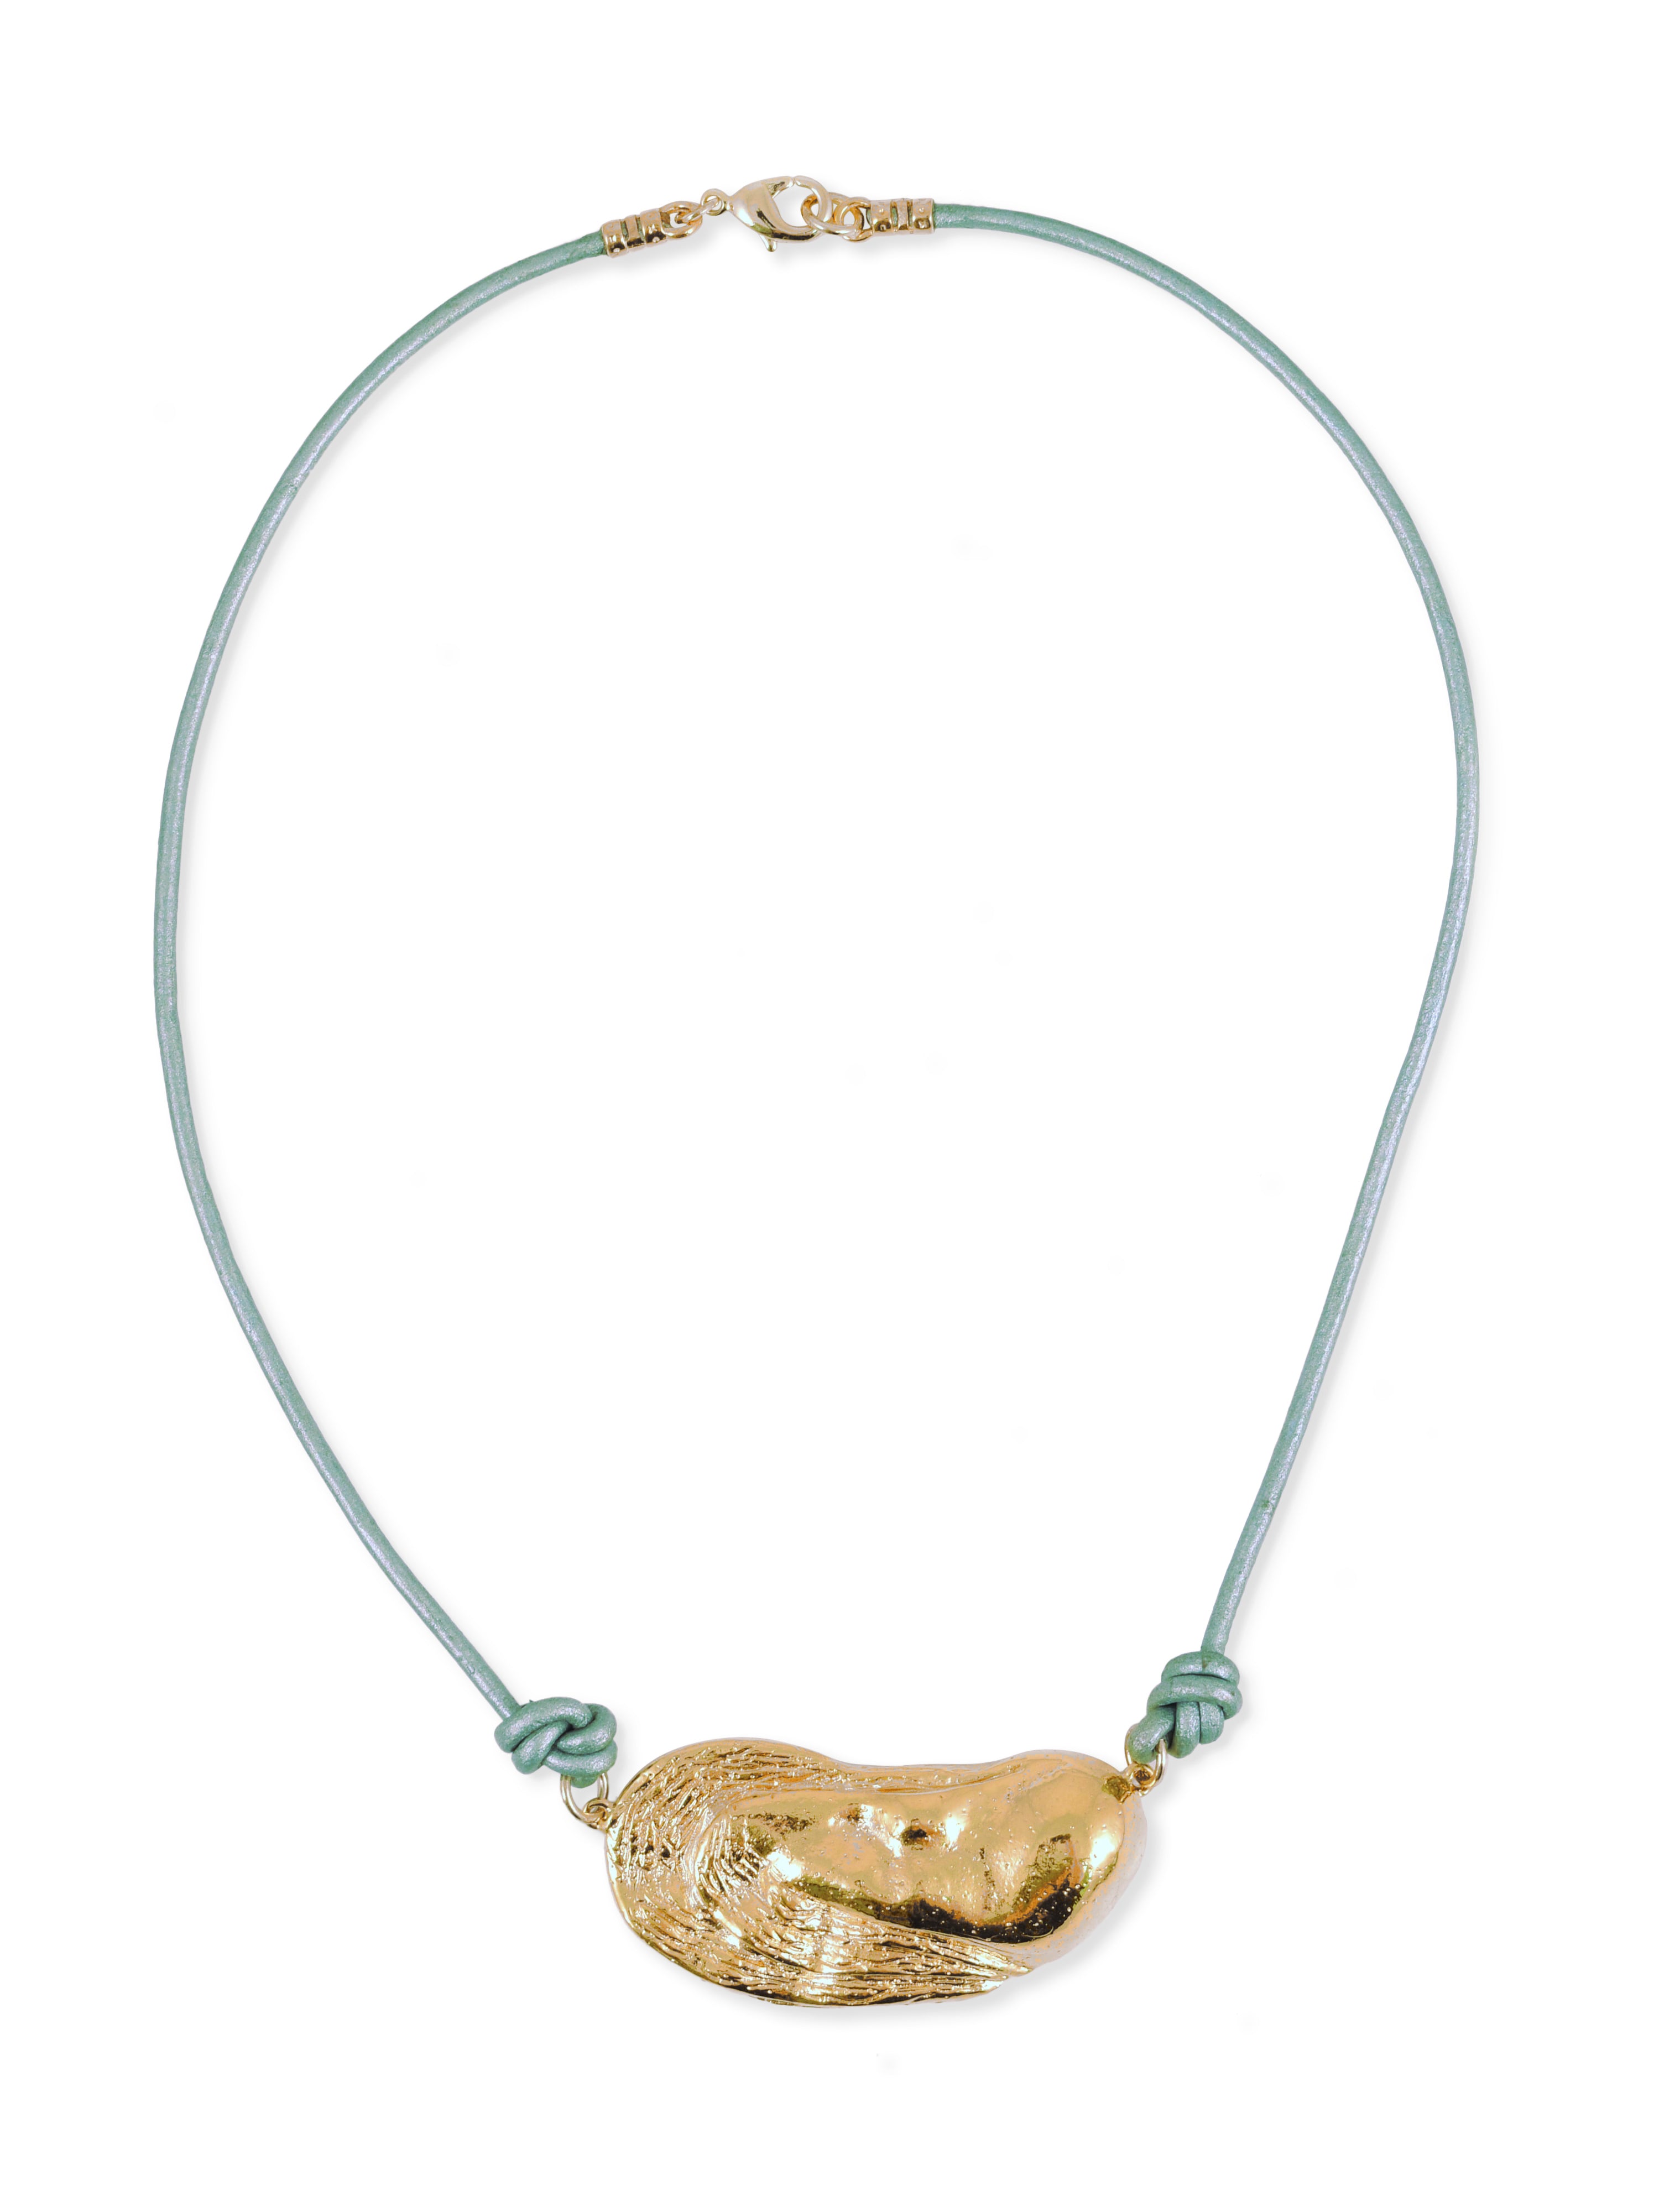 Castaway Oyster Necklace in Seafoam